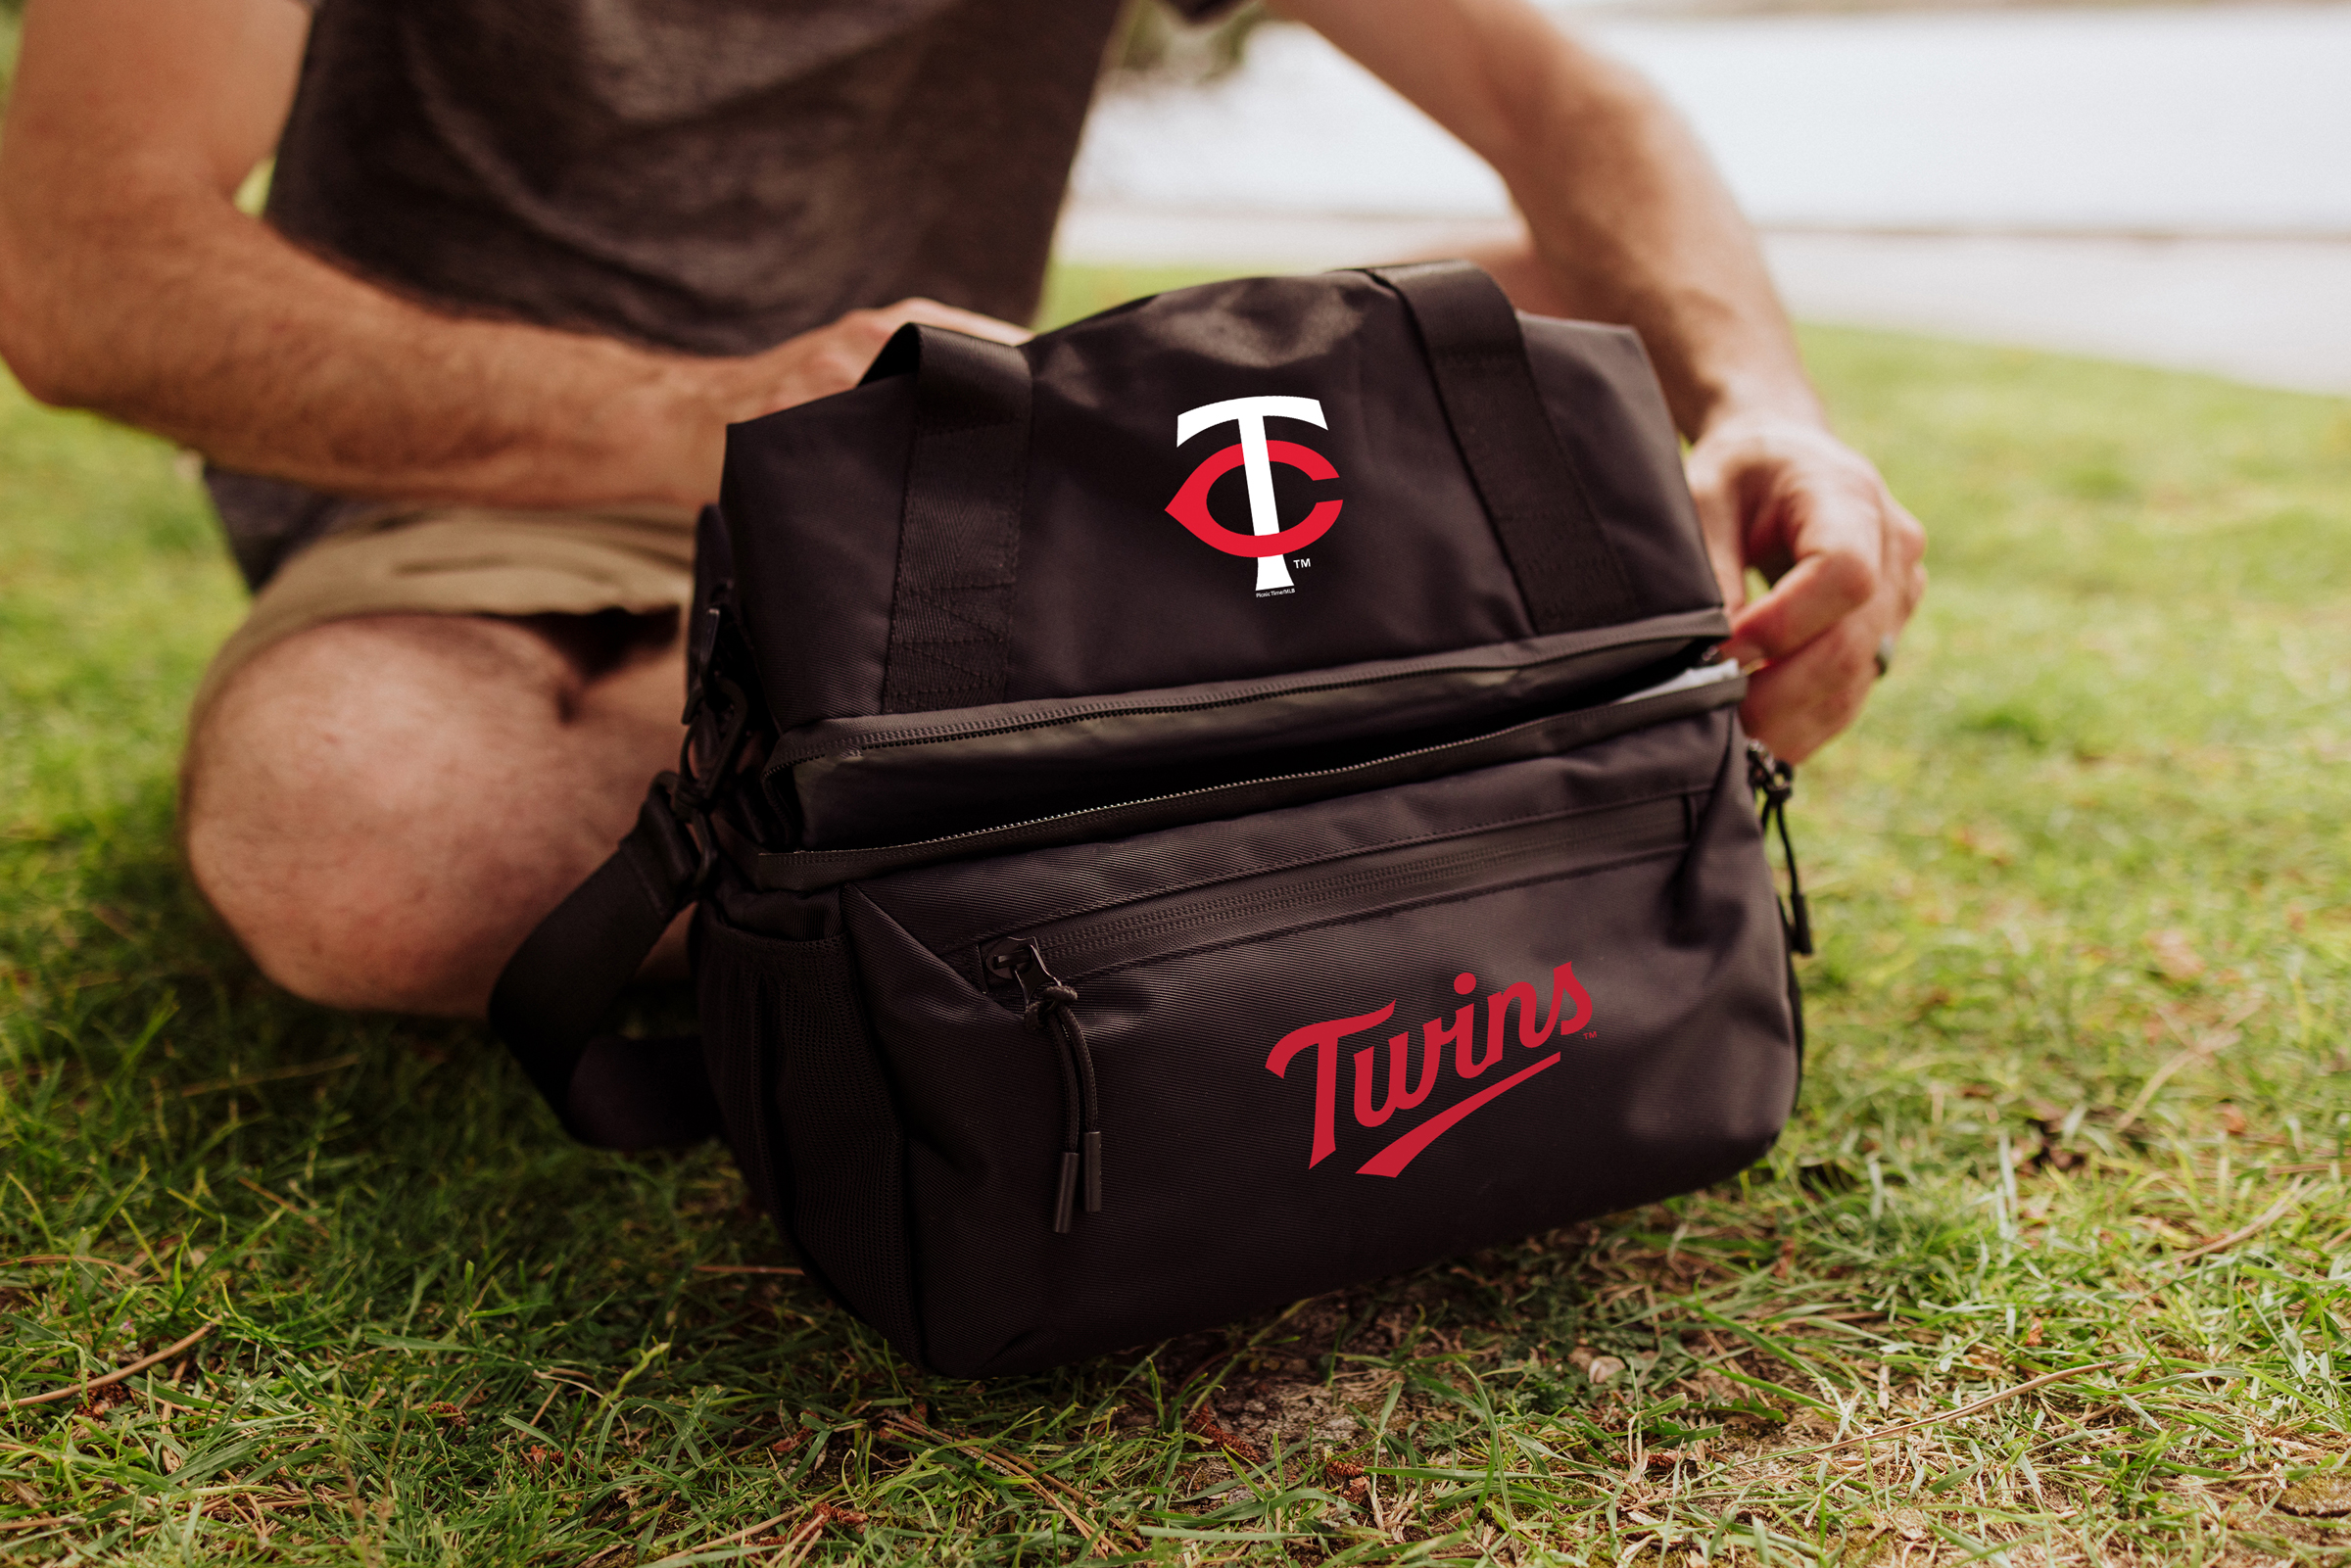 Minnesota Twins - Tarana Lunch Bag Cooler with Utensils